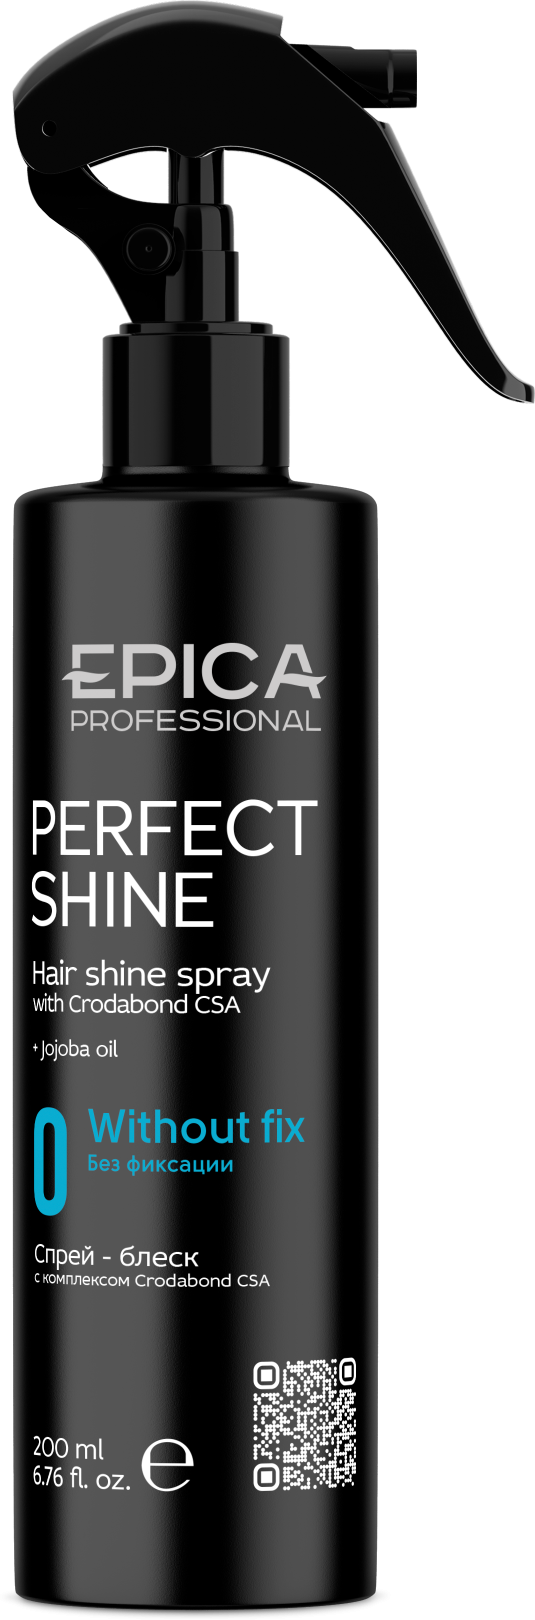 EPICA PROFESSIONAL Perfect shine Спрей-блеск с комплексом Crodabond CSA, 200 мл.